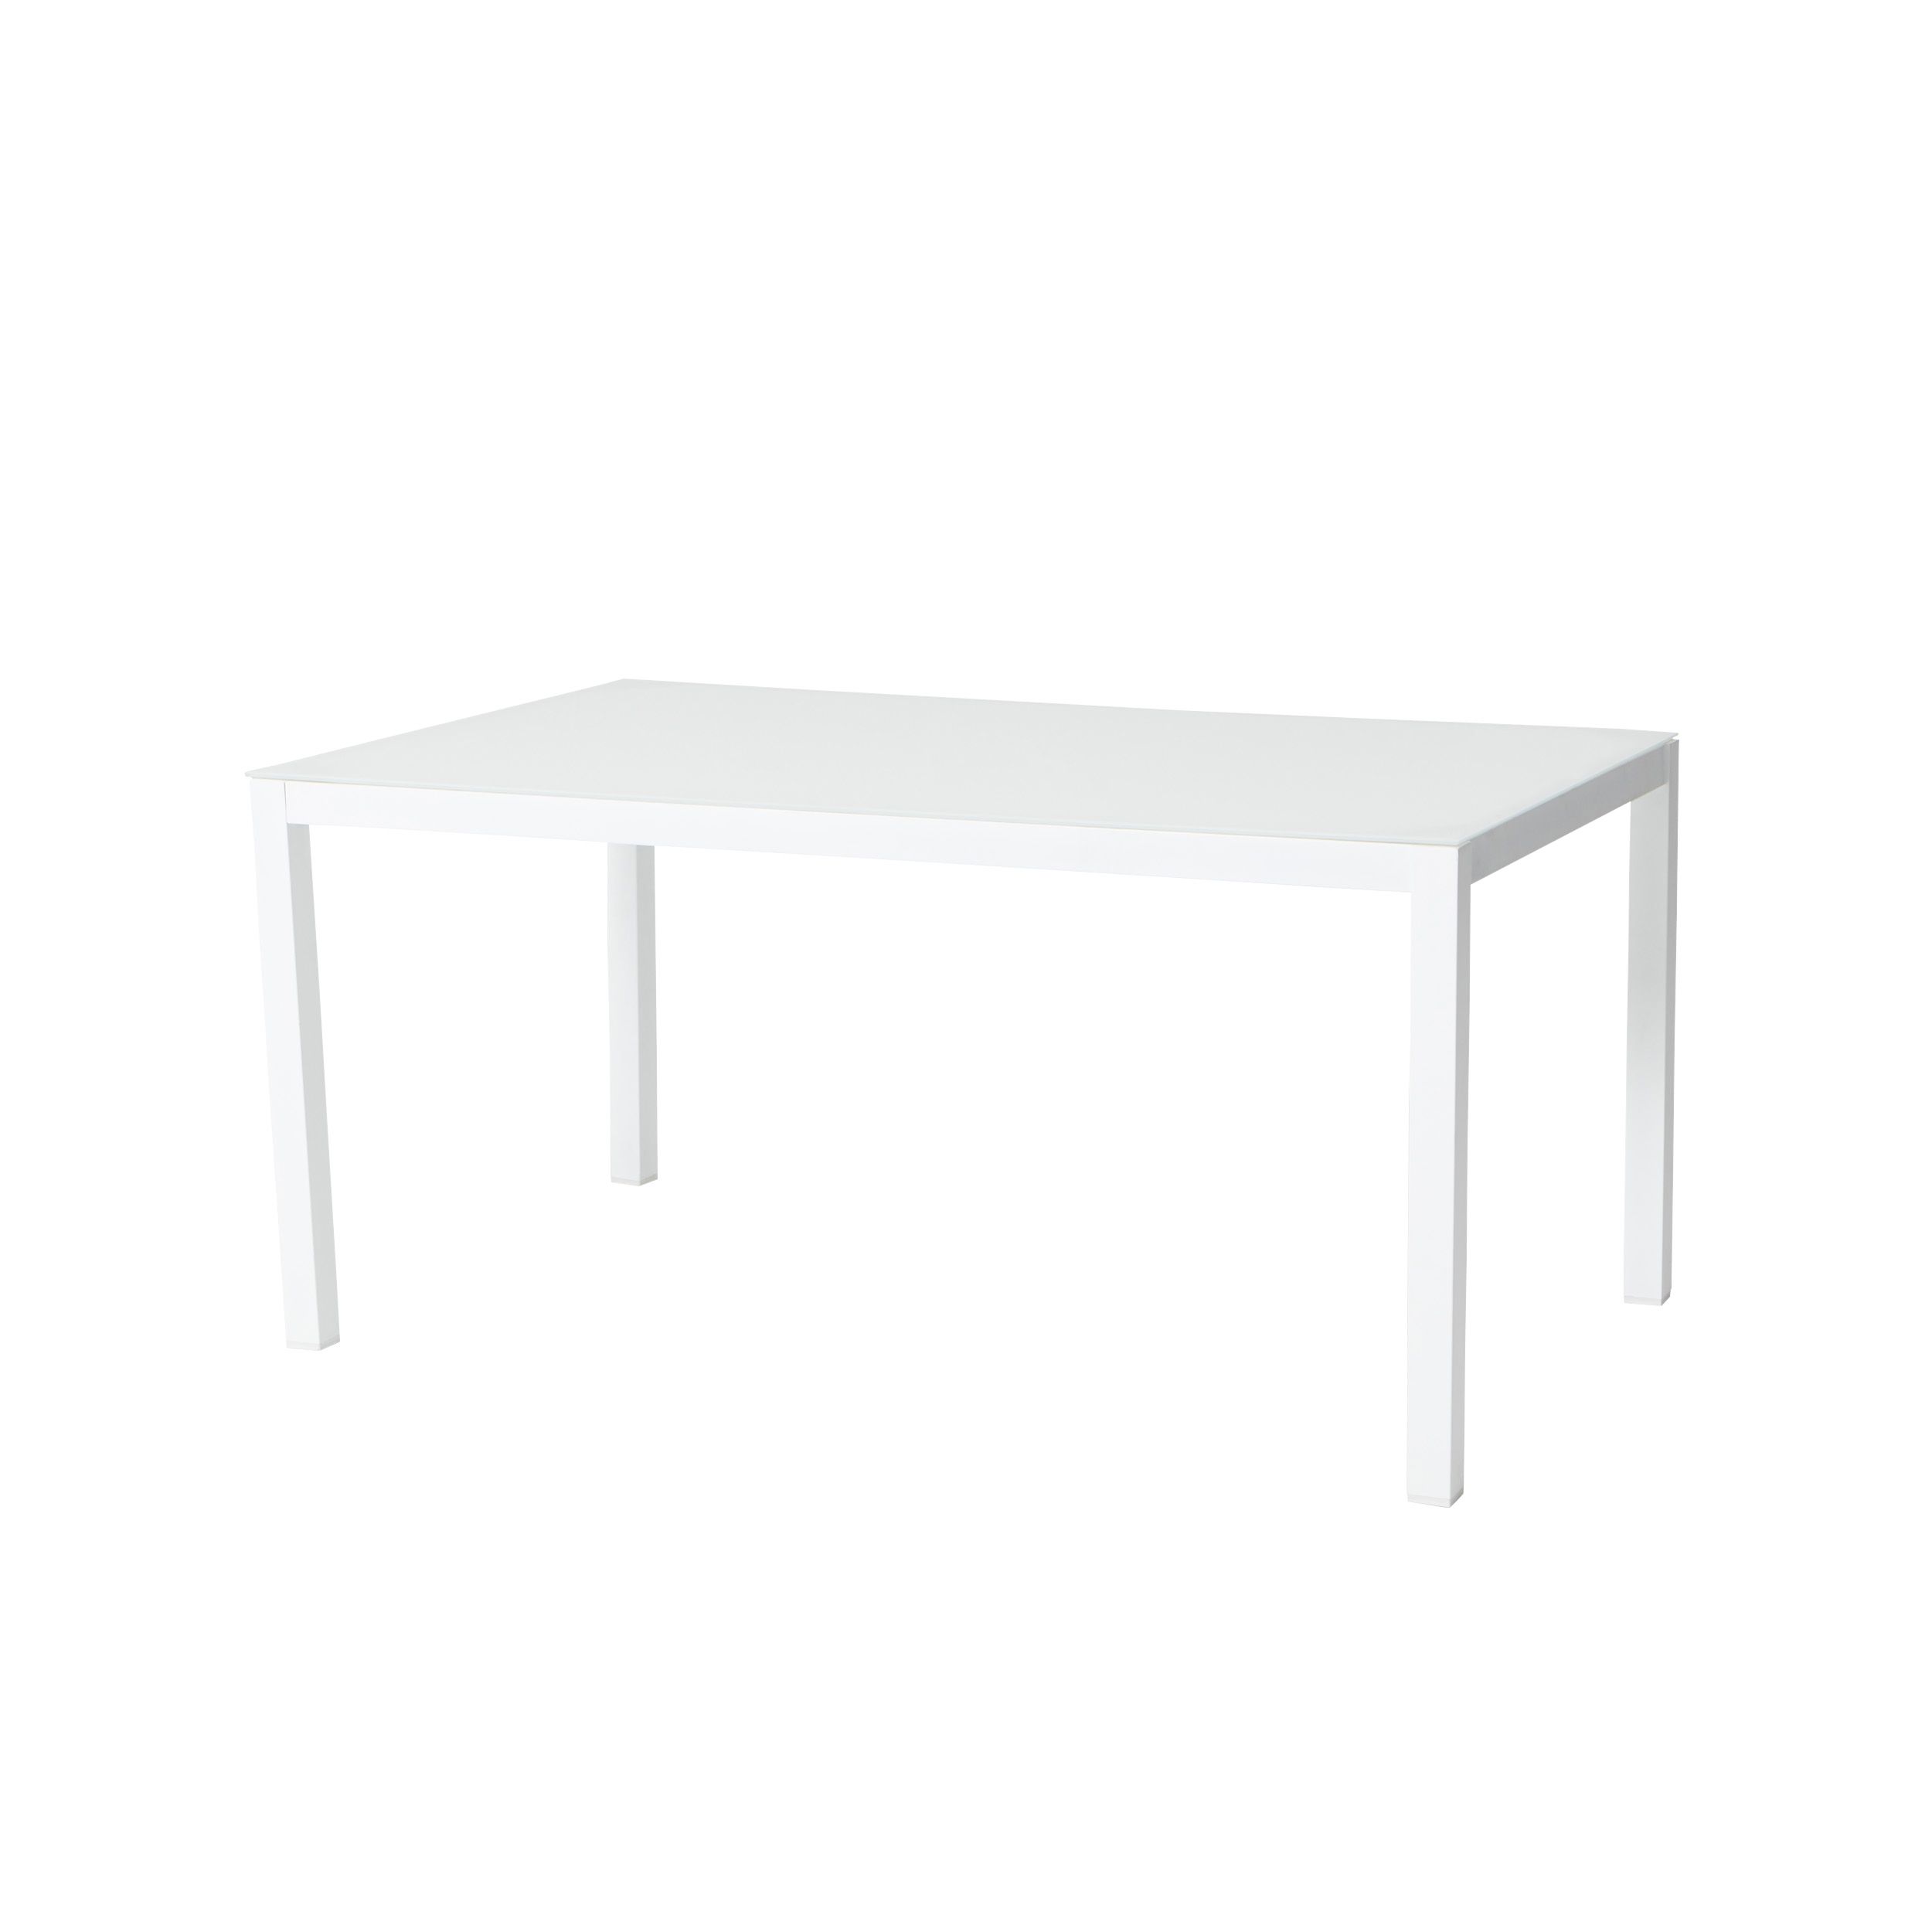 Blooma Janeiro White Metal 4 seater Table